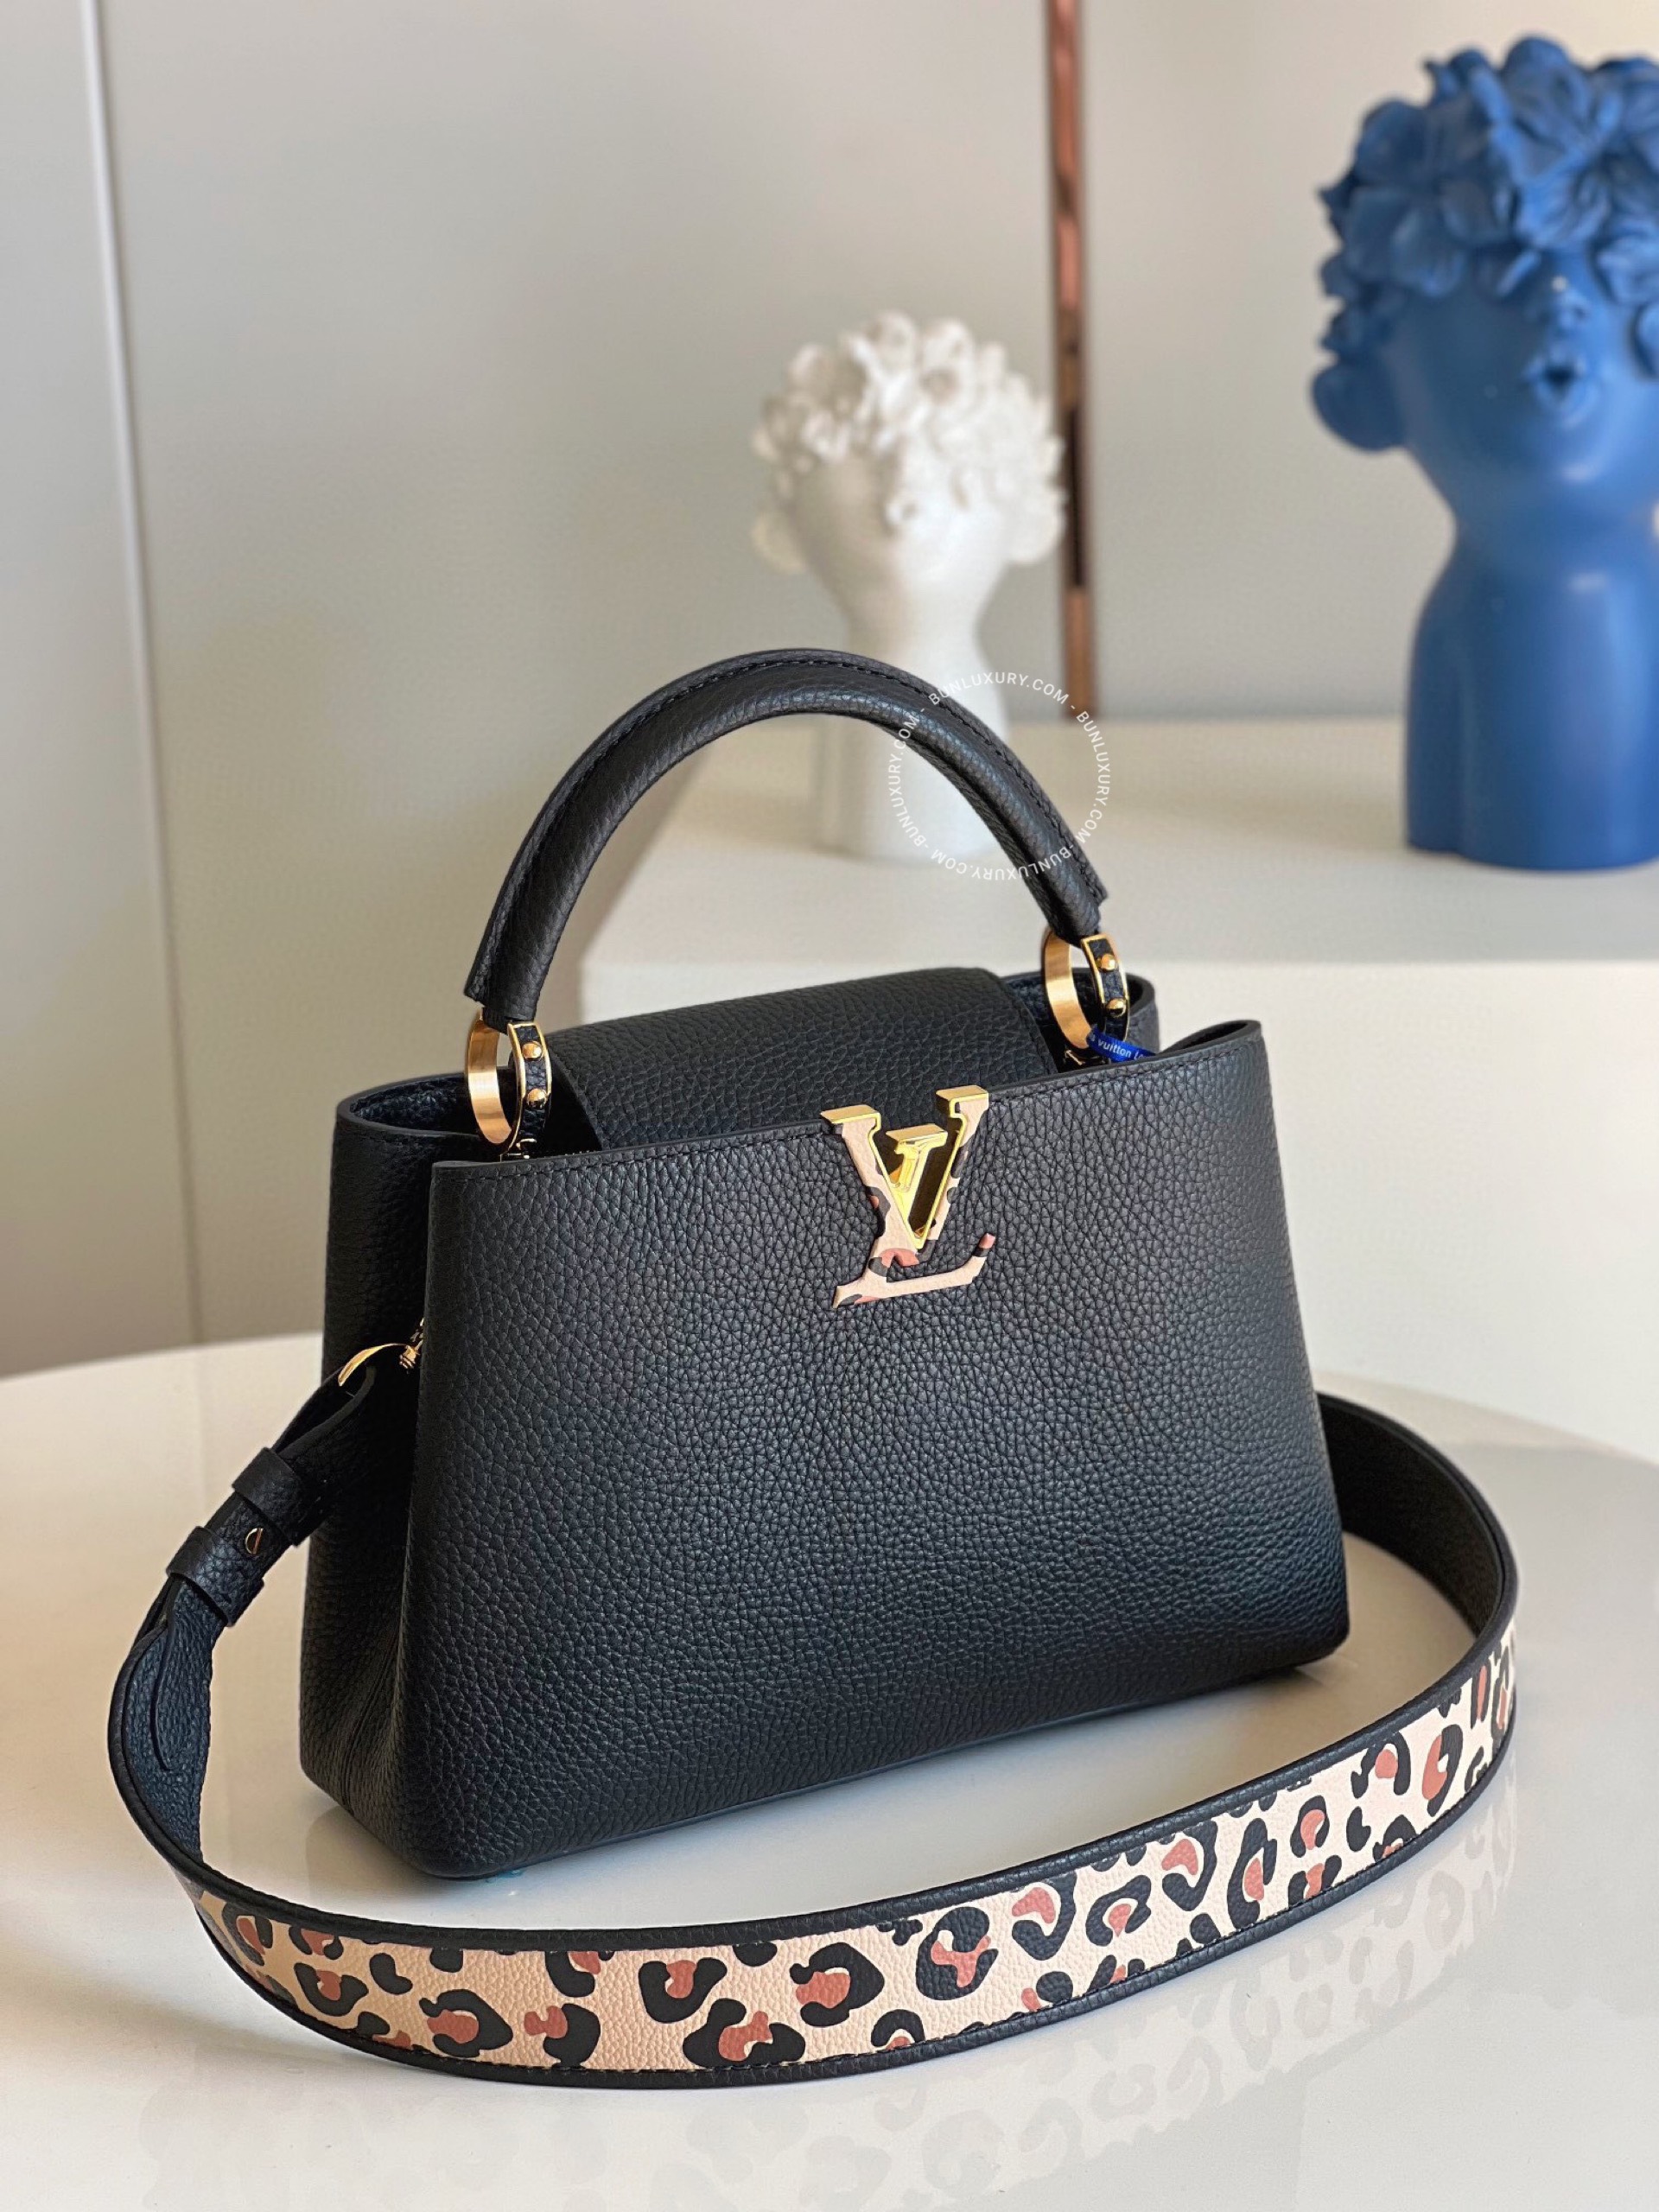 Túi xách Louis Vuitton Capucines Bb M57215